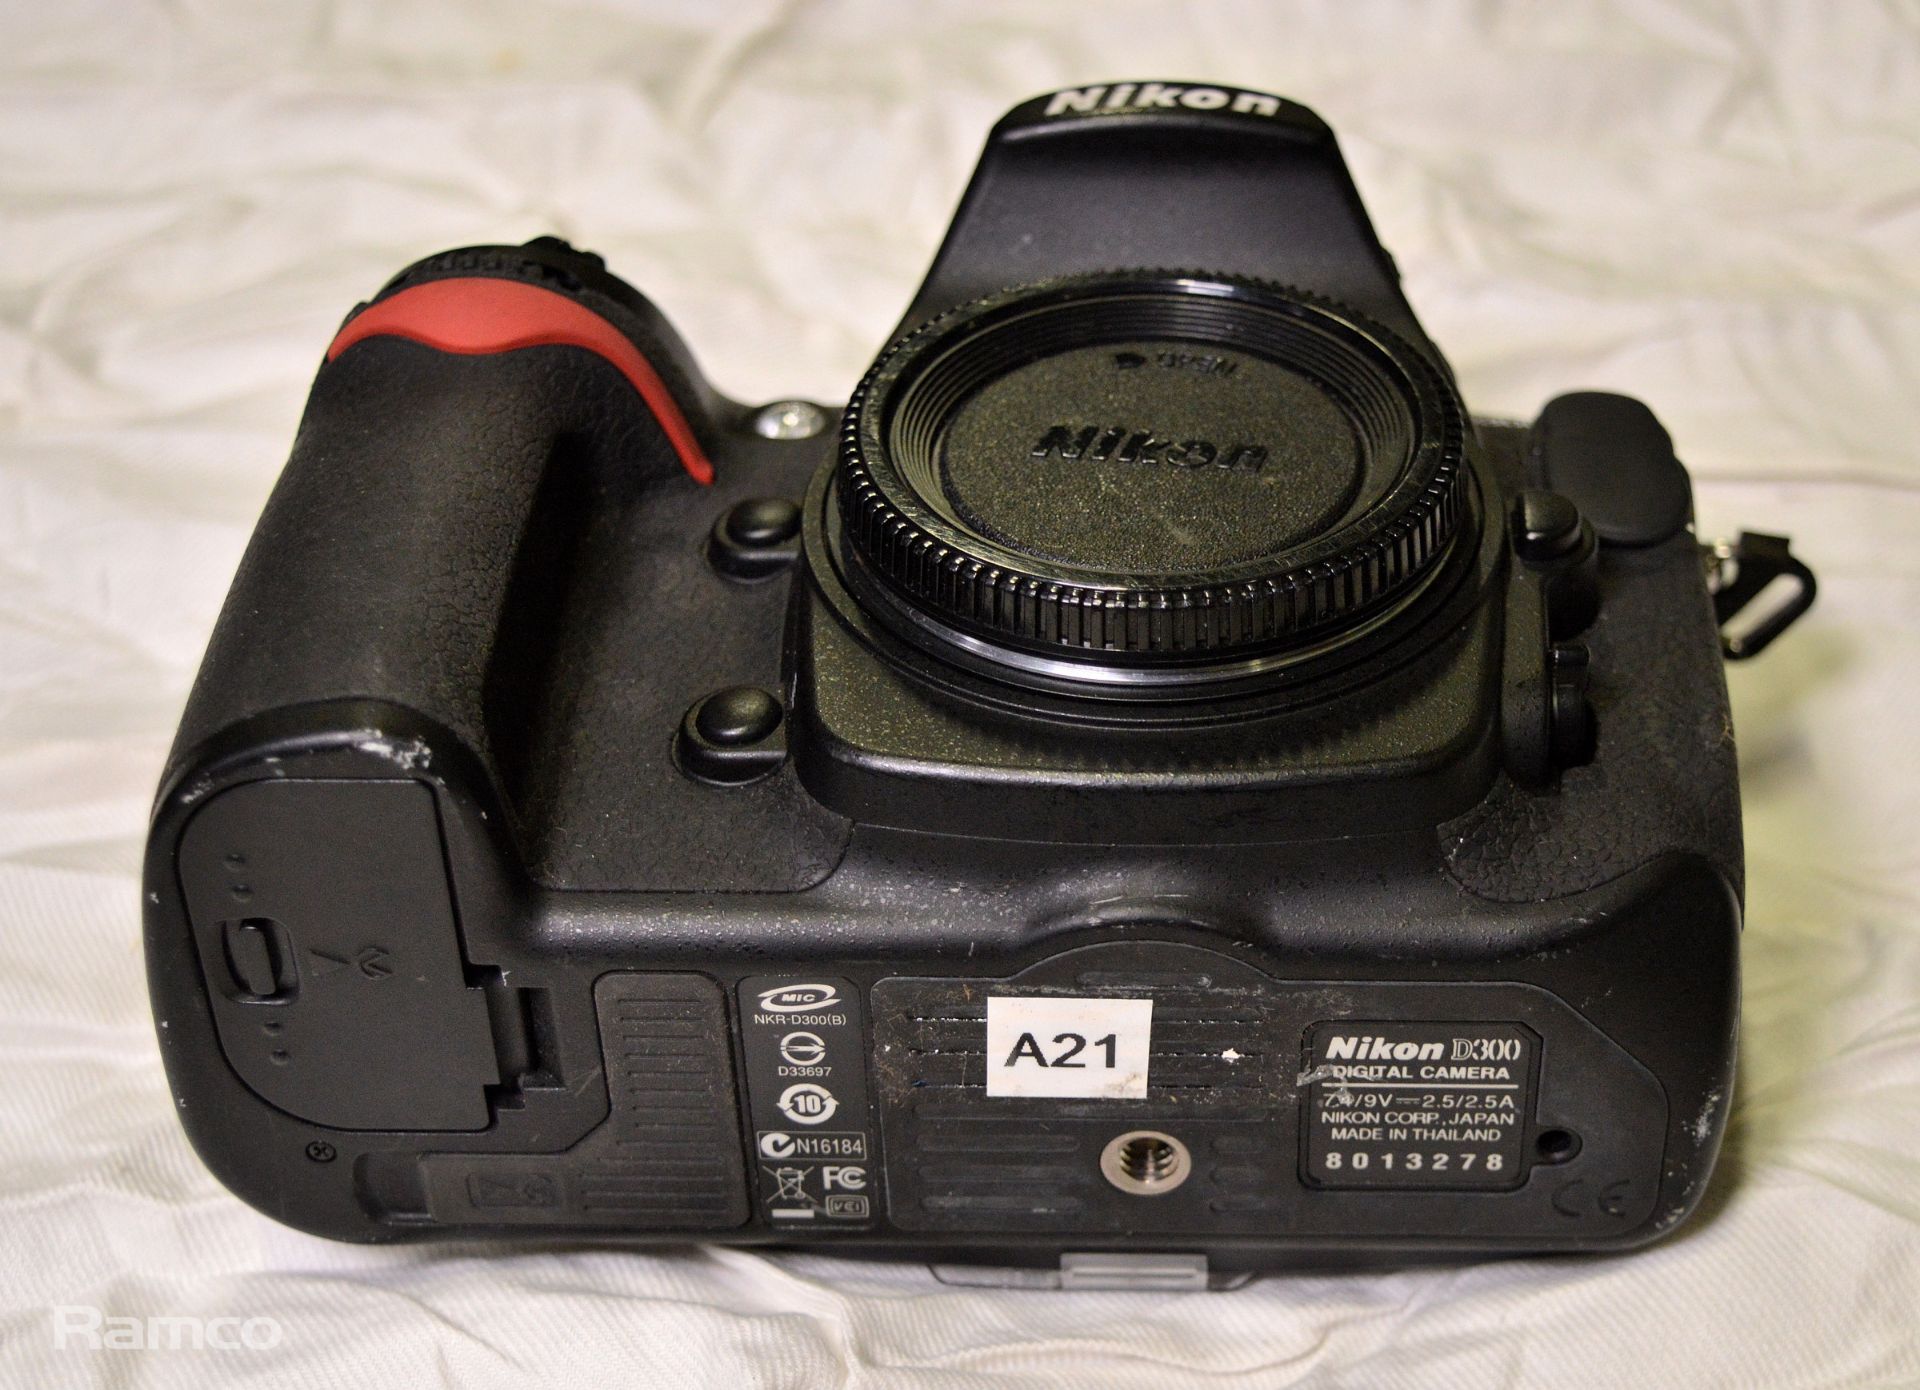 Nikon D300 SLR Digital Camera Body - Image 7 of 8